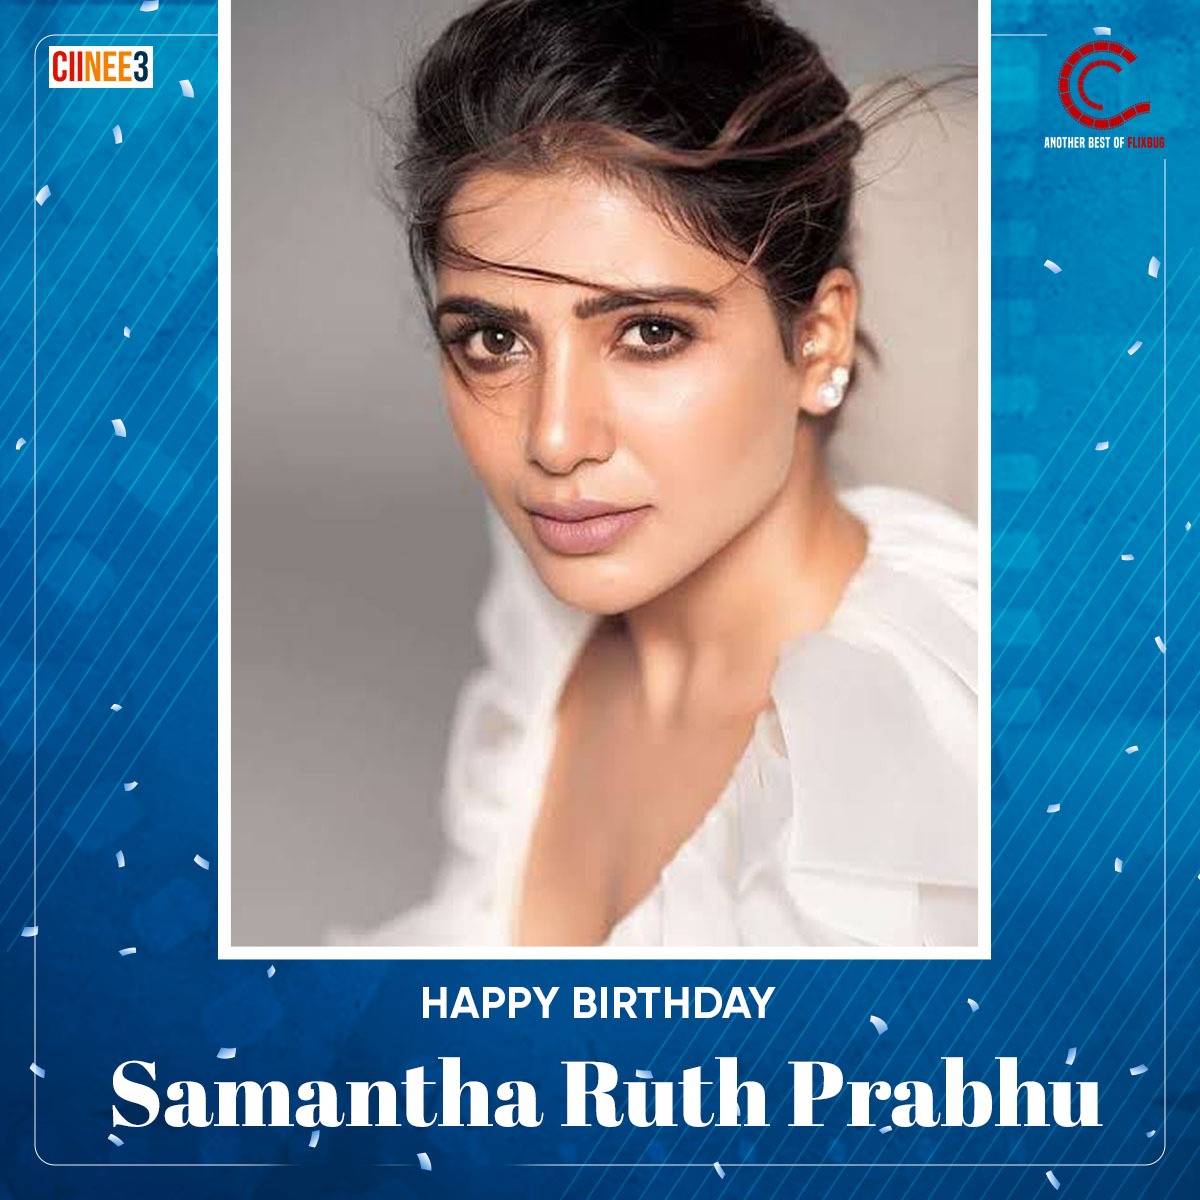 𝐂𝐢𝐢𝐧𝐞𝐞𝟑 Wishing a very Happy Birthday to Samantha Ruth Prabhu from #ciinee @Samanthaprabhu2 #HappyBirthdaySamantha #SamanthaRuthPrabhu #bestwishes #birthdaygirl #Actress #southmovie #ciinee3